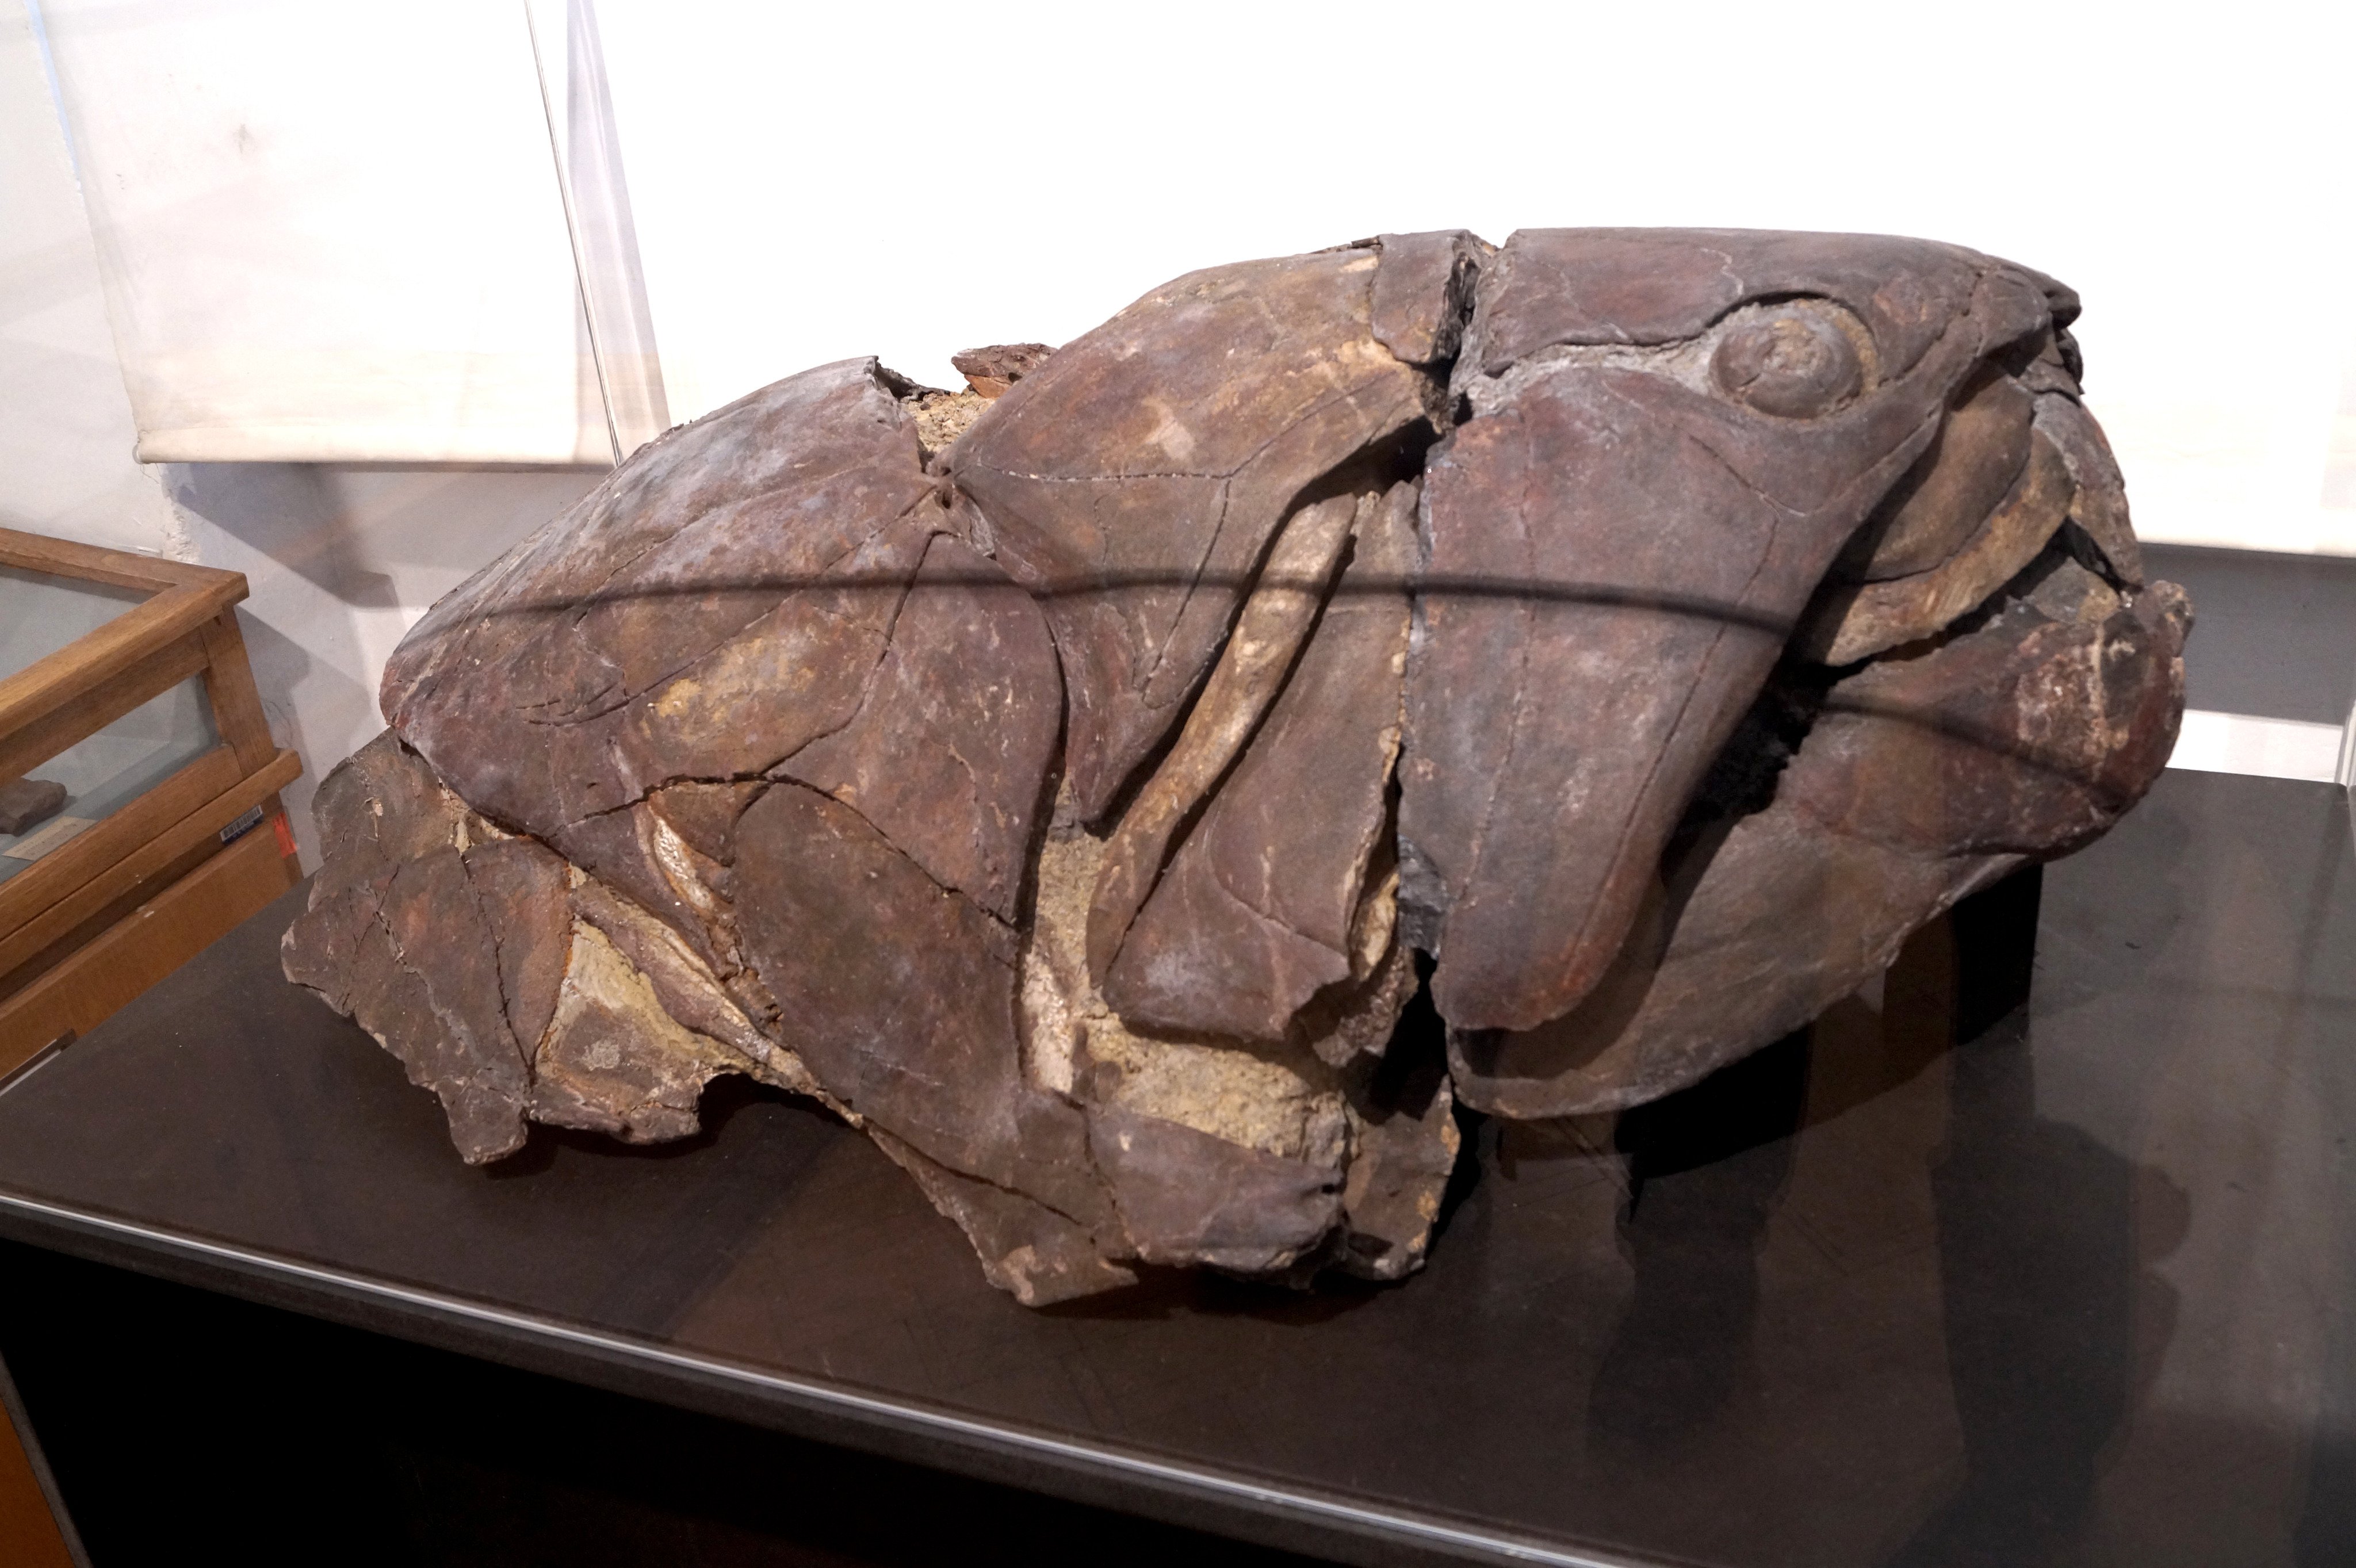 Sven Sachs on X: "Skull of the huge Devonian placoderm fish Dunkleosteus on display at the Paläontologische Sammlung der Universität Tübingen in Tübingen (Germany). #Fossil #fish #Devonian #nature #museum #university #Tuebingen #paleontology #